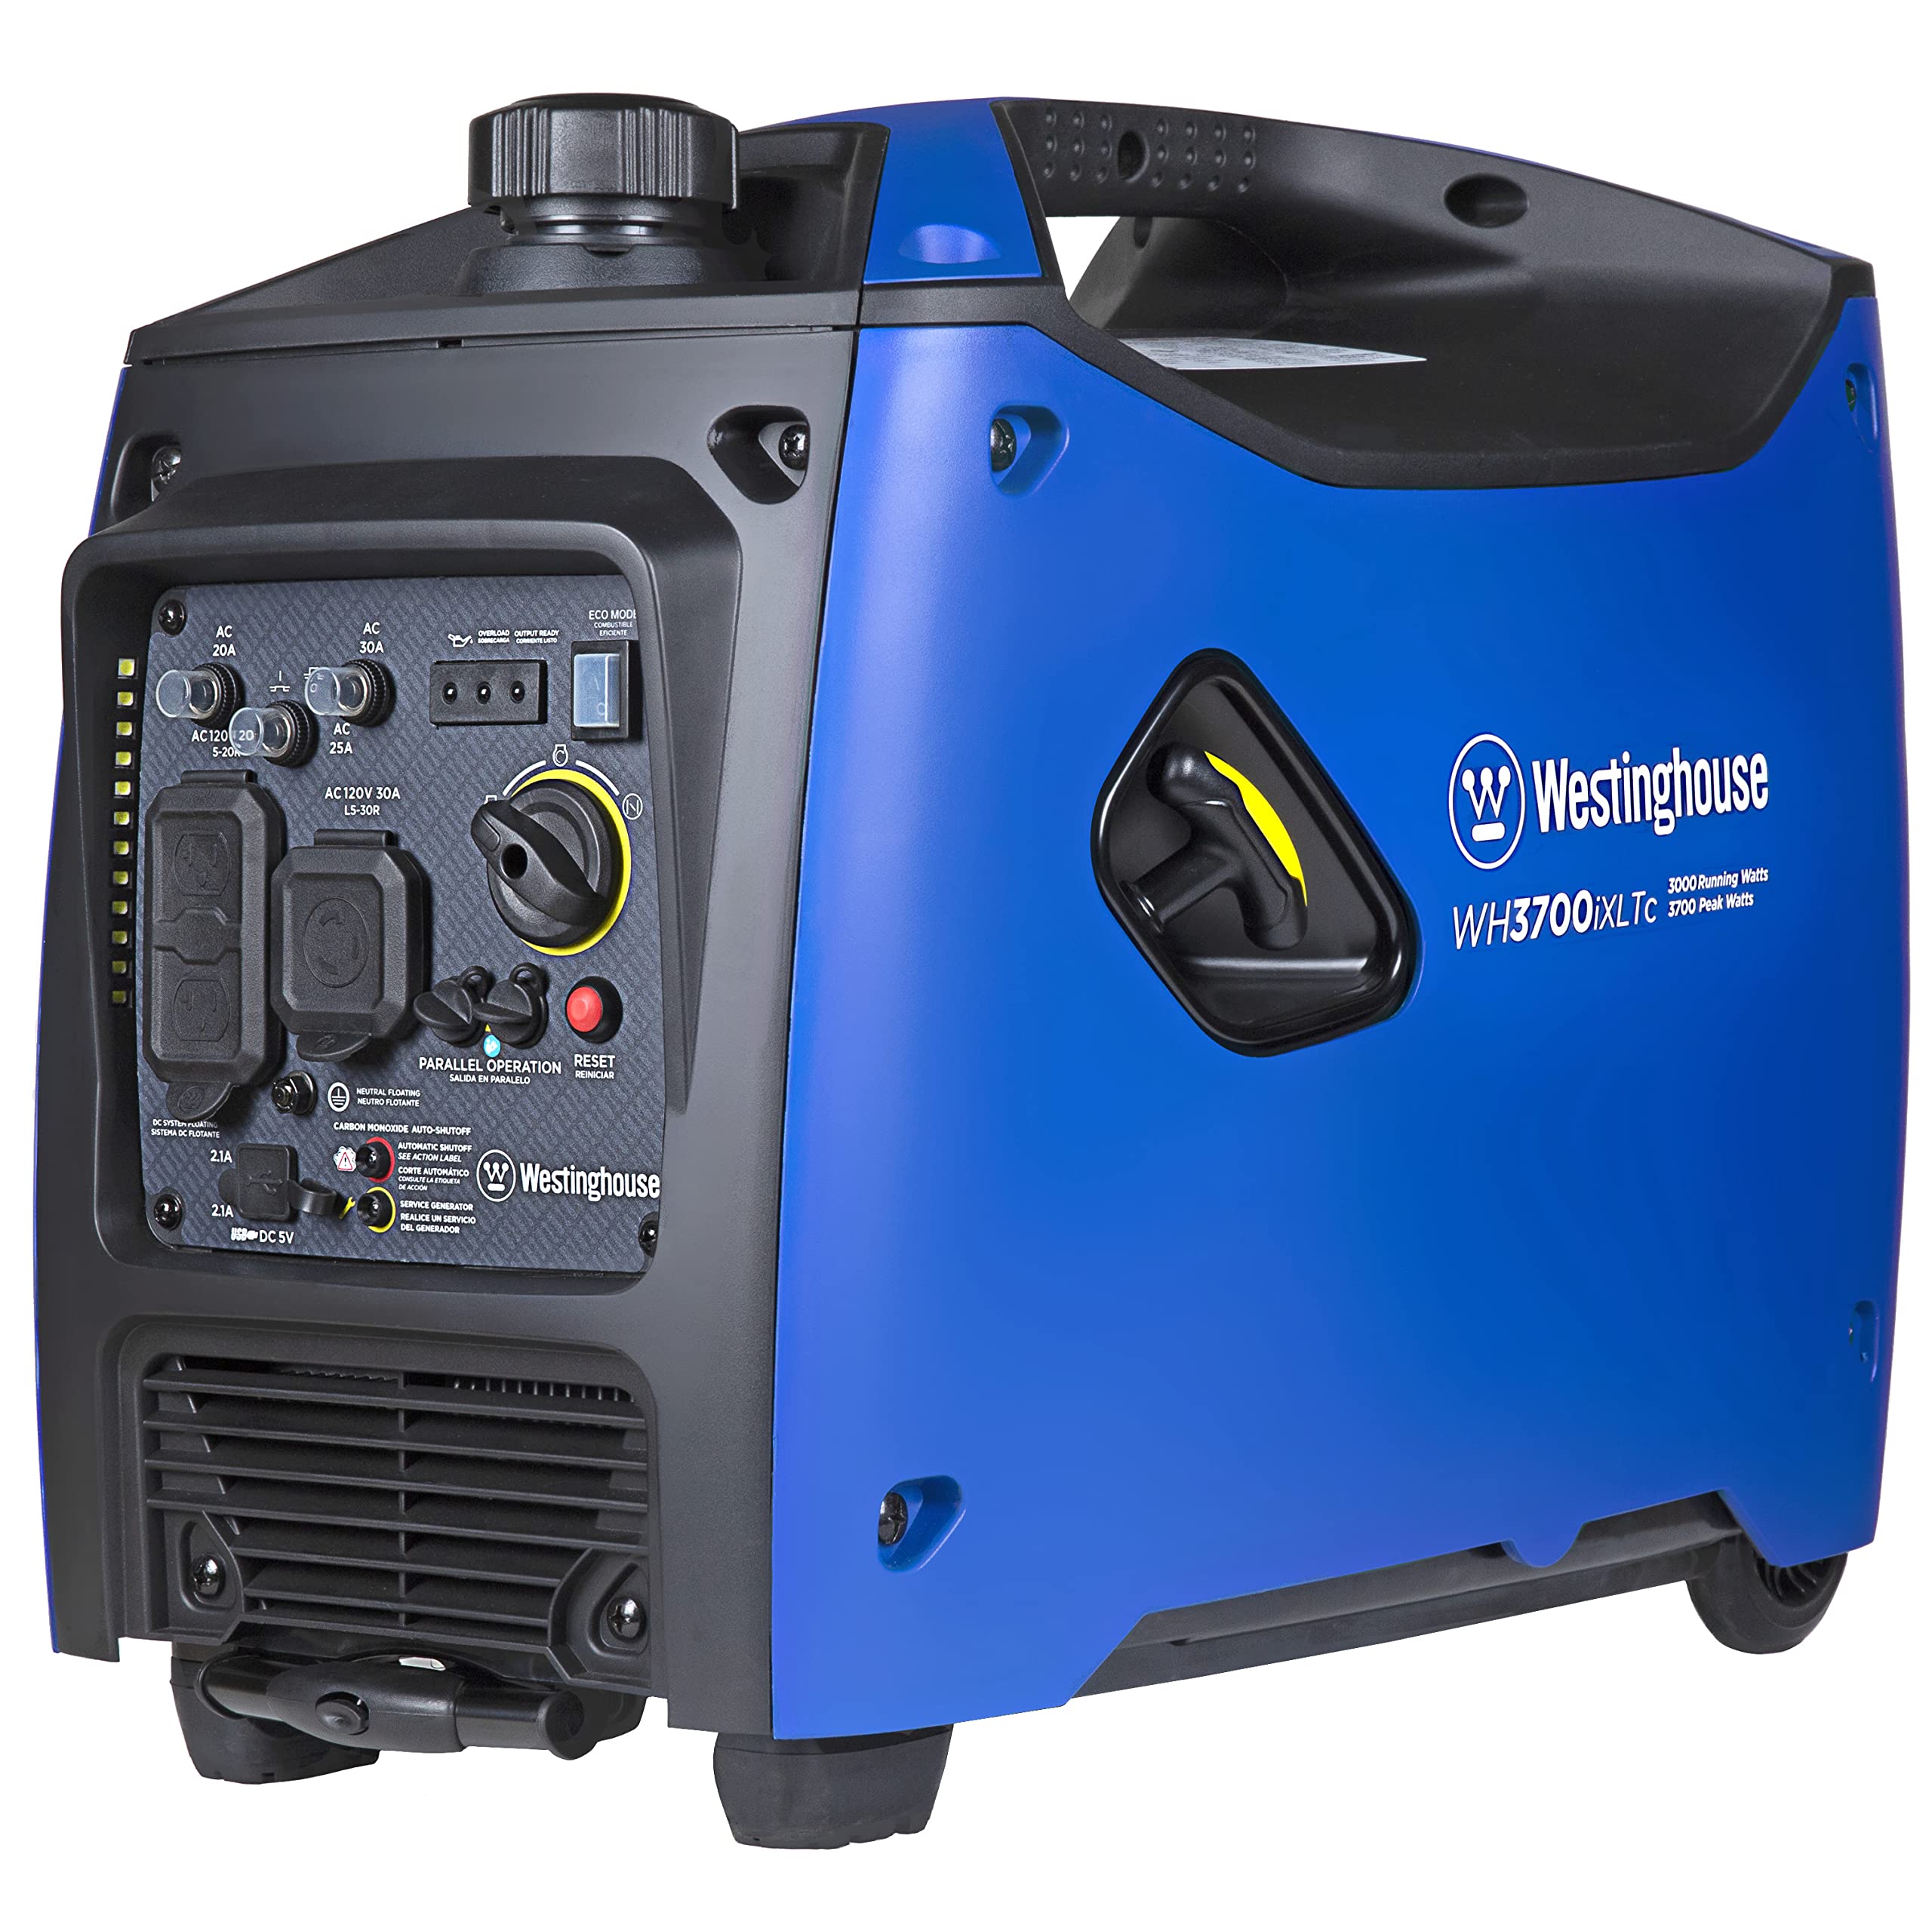 3700 Watt Westinghouse Super Quiet Portable Inverter Generator w/ CO Sensor $398 + Free Shipping